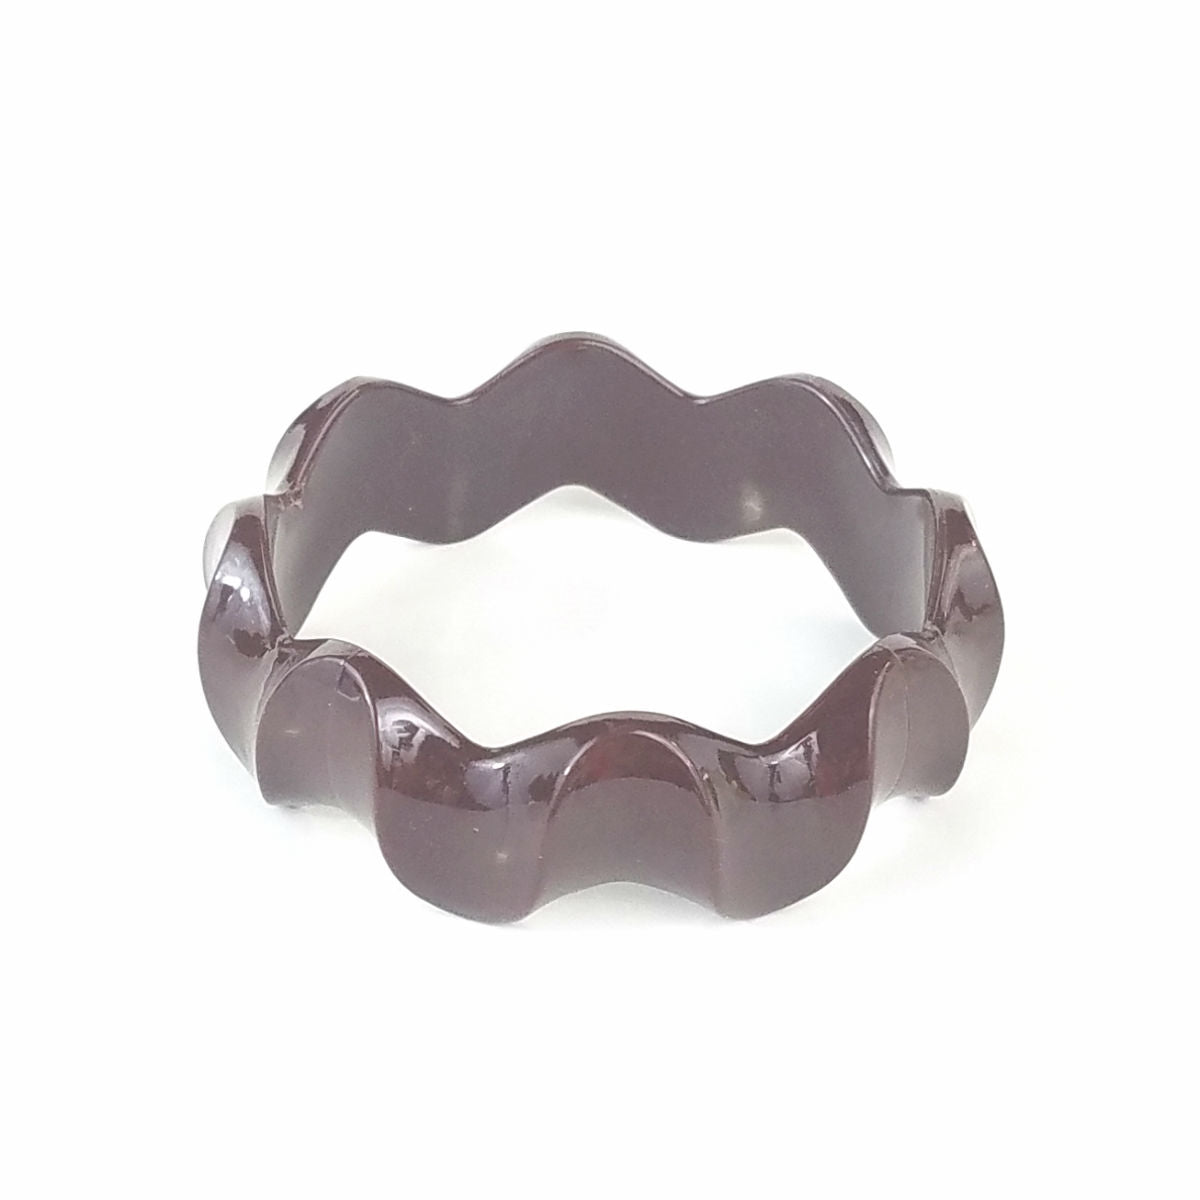 1" wide shiny plastic wavy rickrack shape bangle in chocolate brown